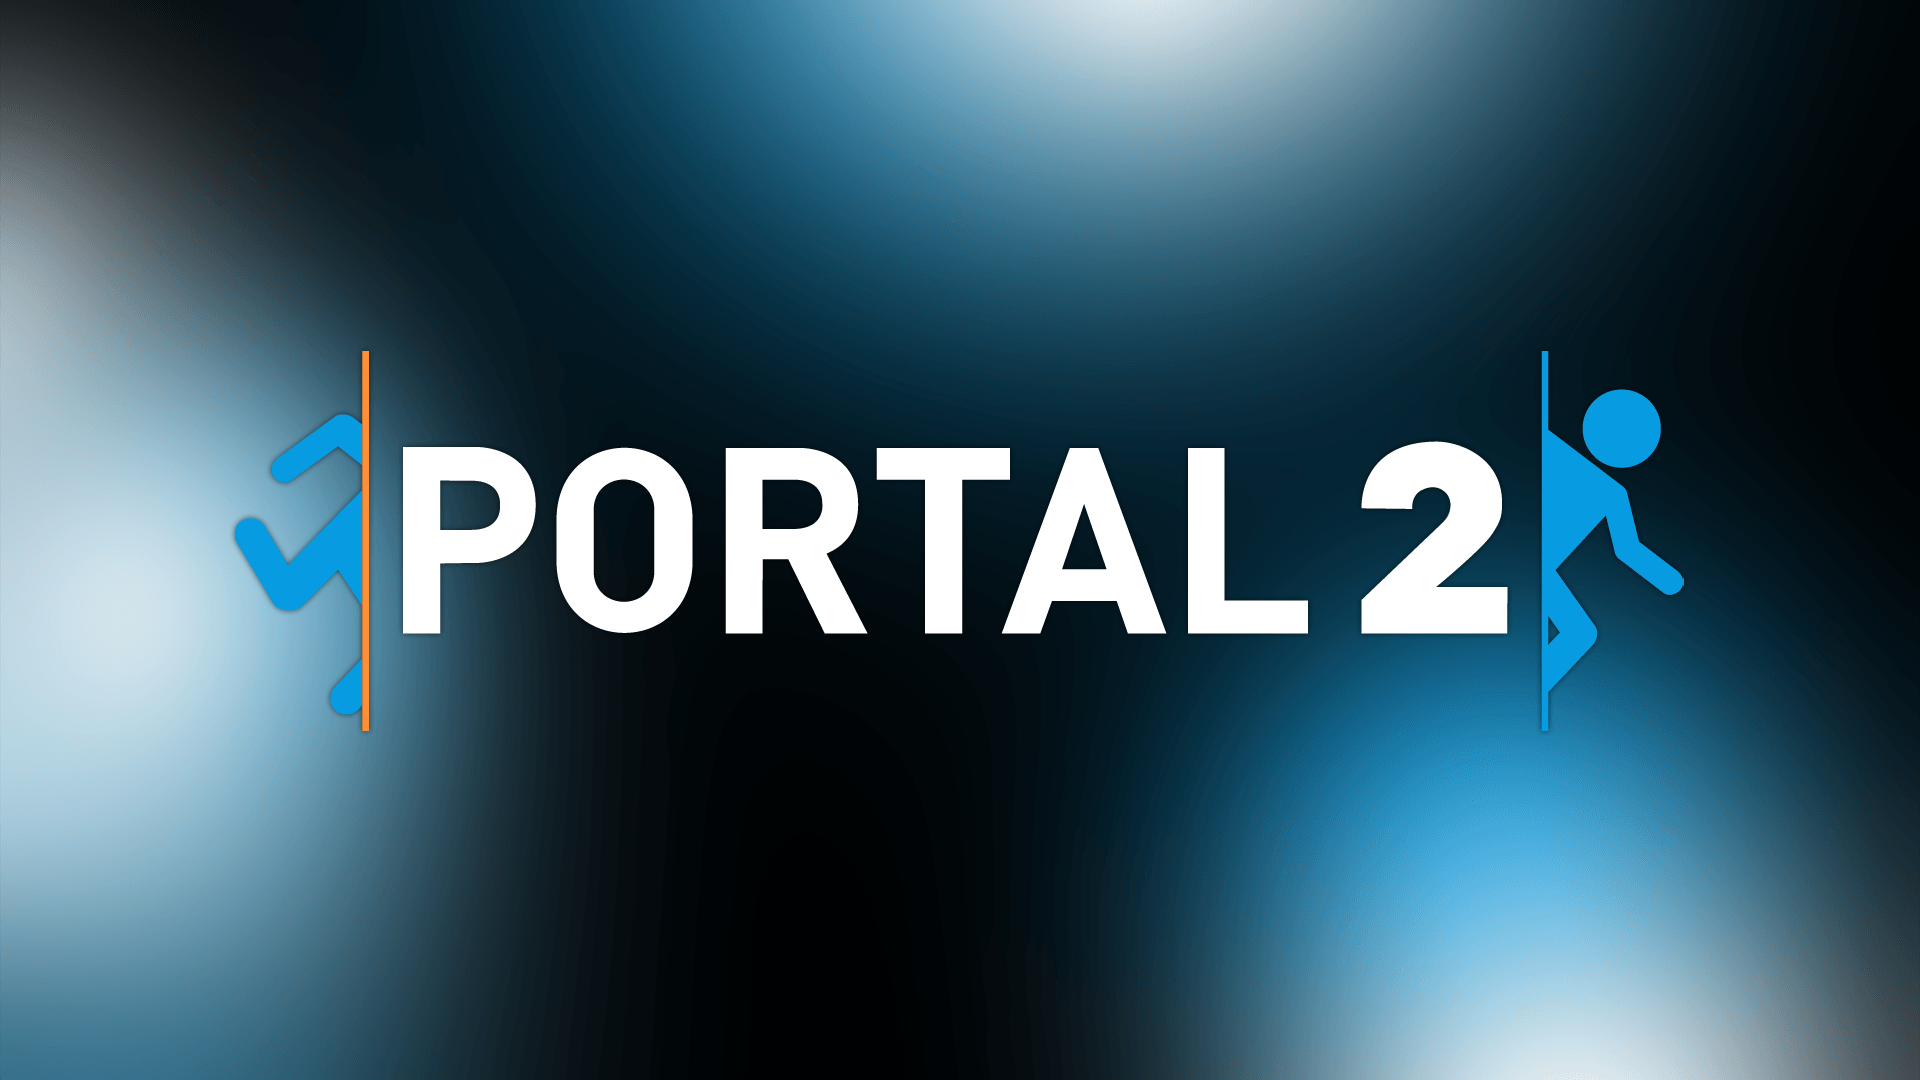 Portal 2 Wikia Wallpapers